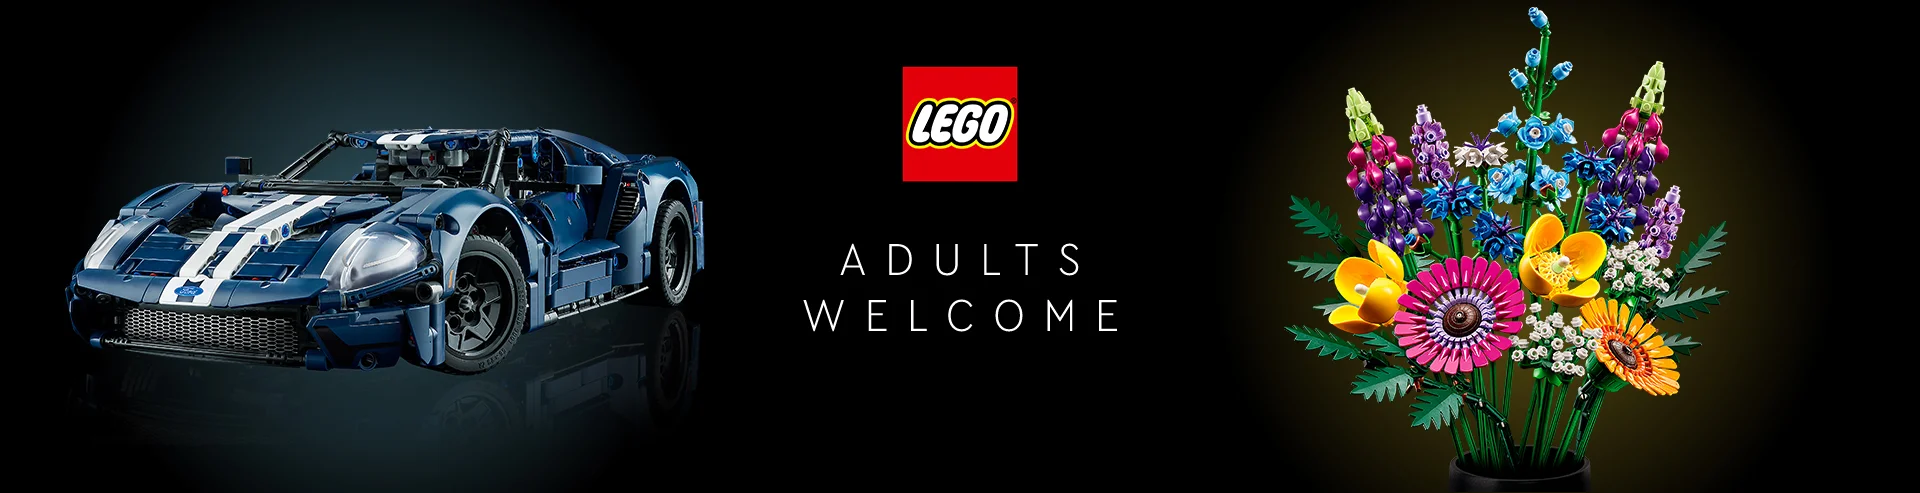 VM-Hero-LEGO-Adults-Welcome-1920x493.webp